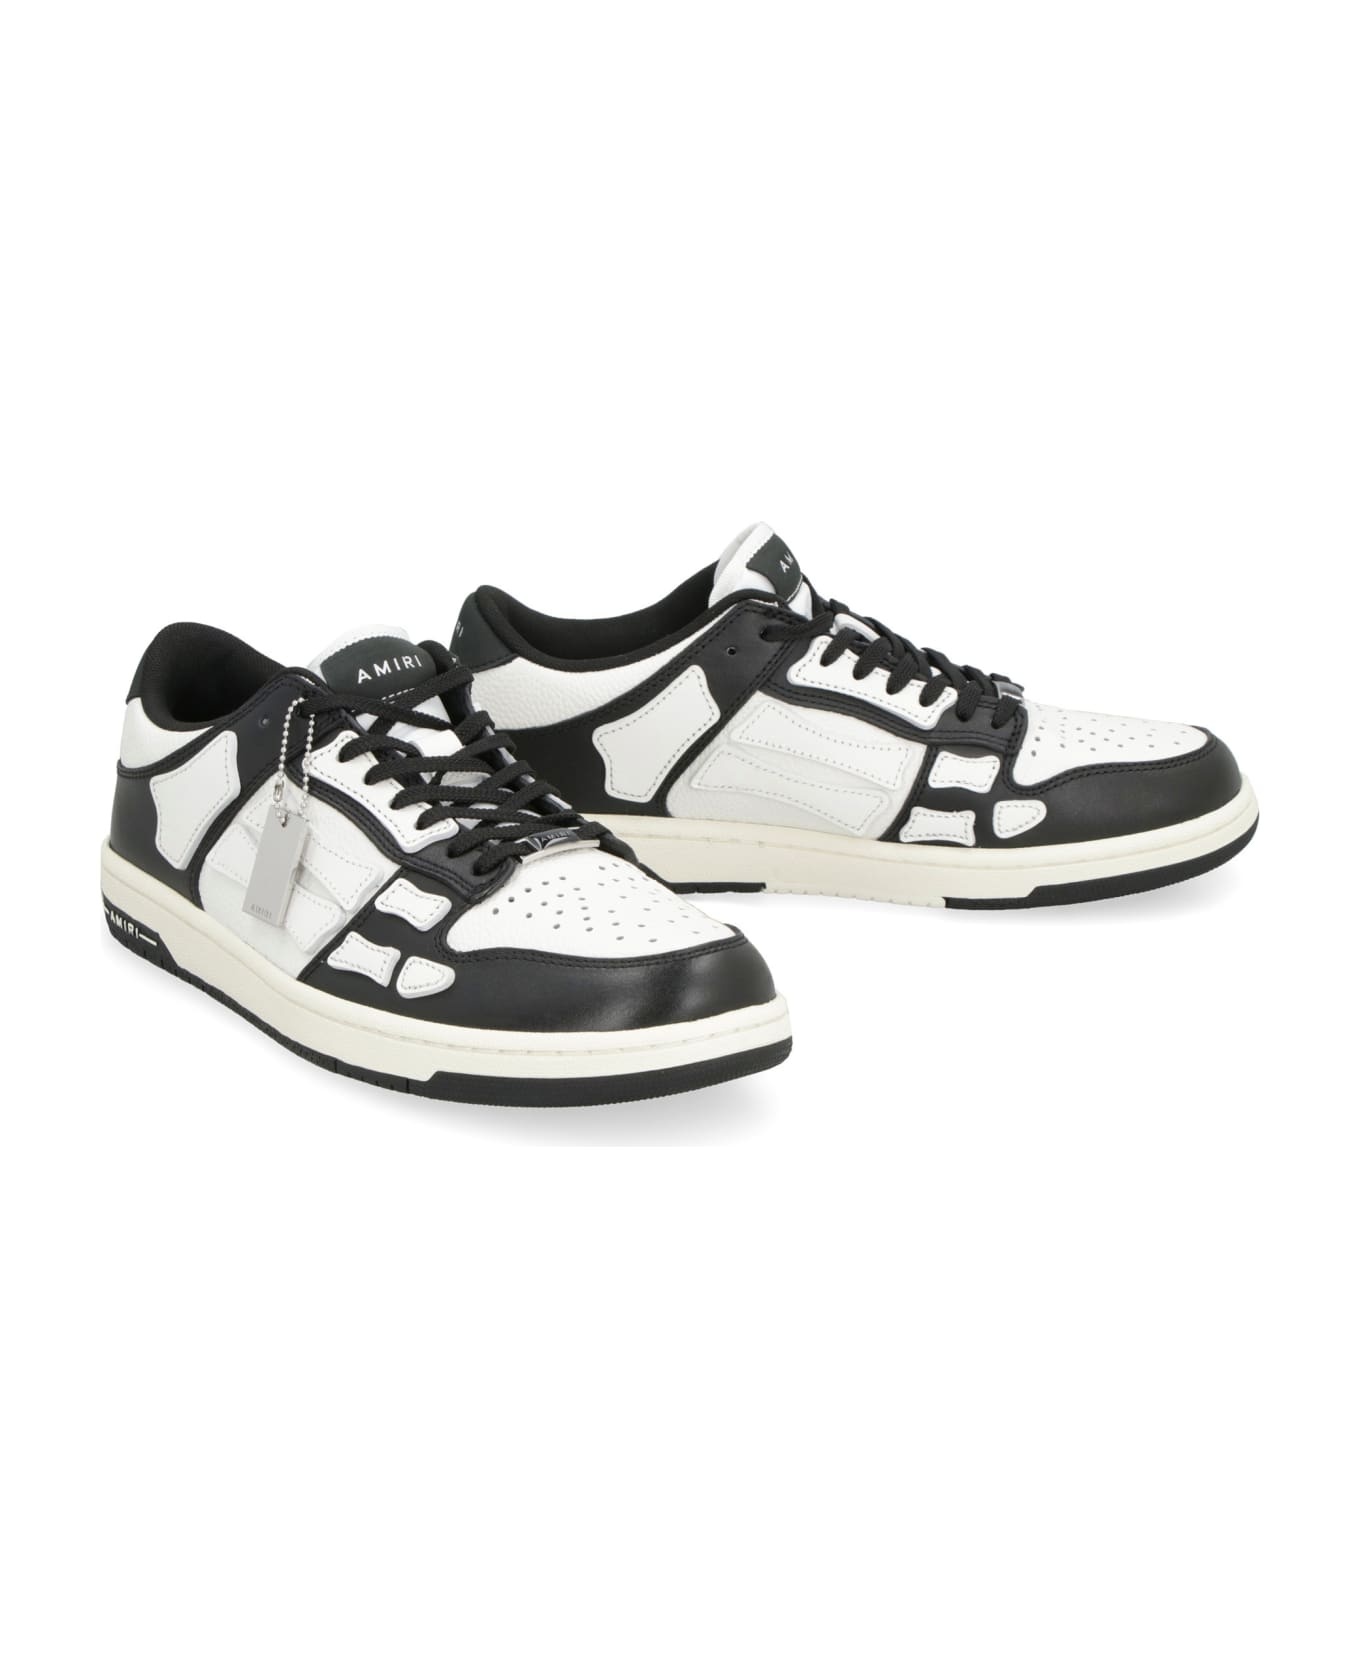 Black And White Skel Low Sneakers - 3